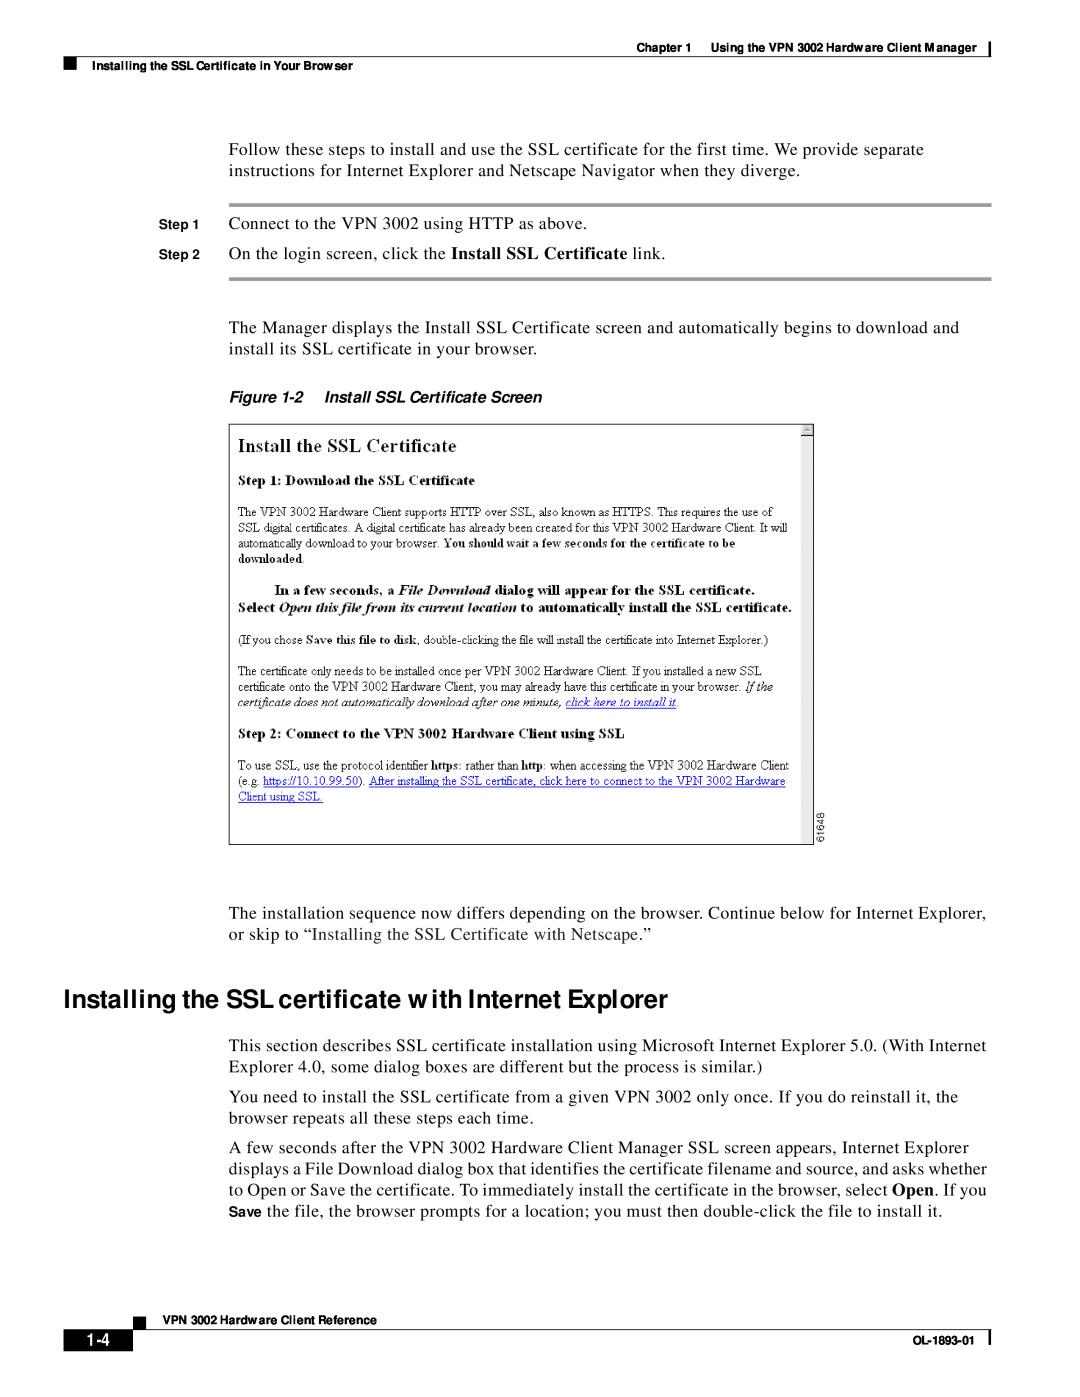 Cisco Systems VPN 3002 manual 2Install SSL Certificate Screen 